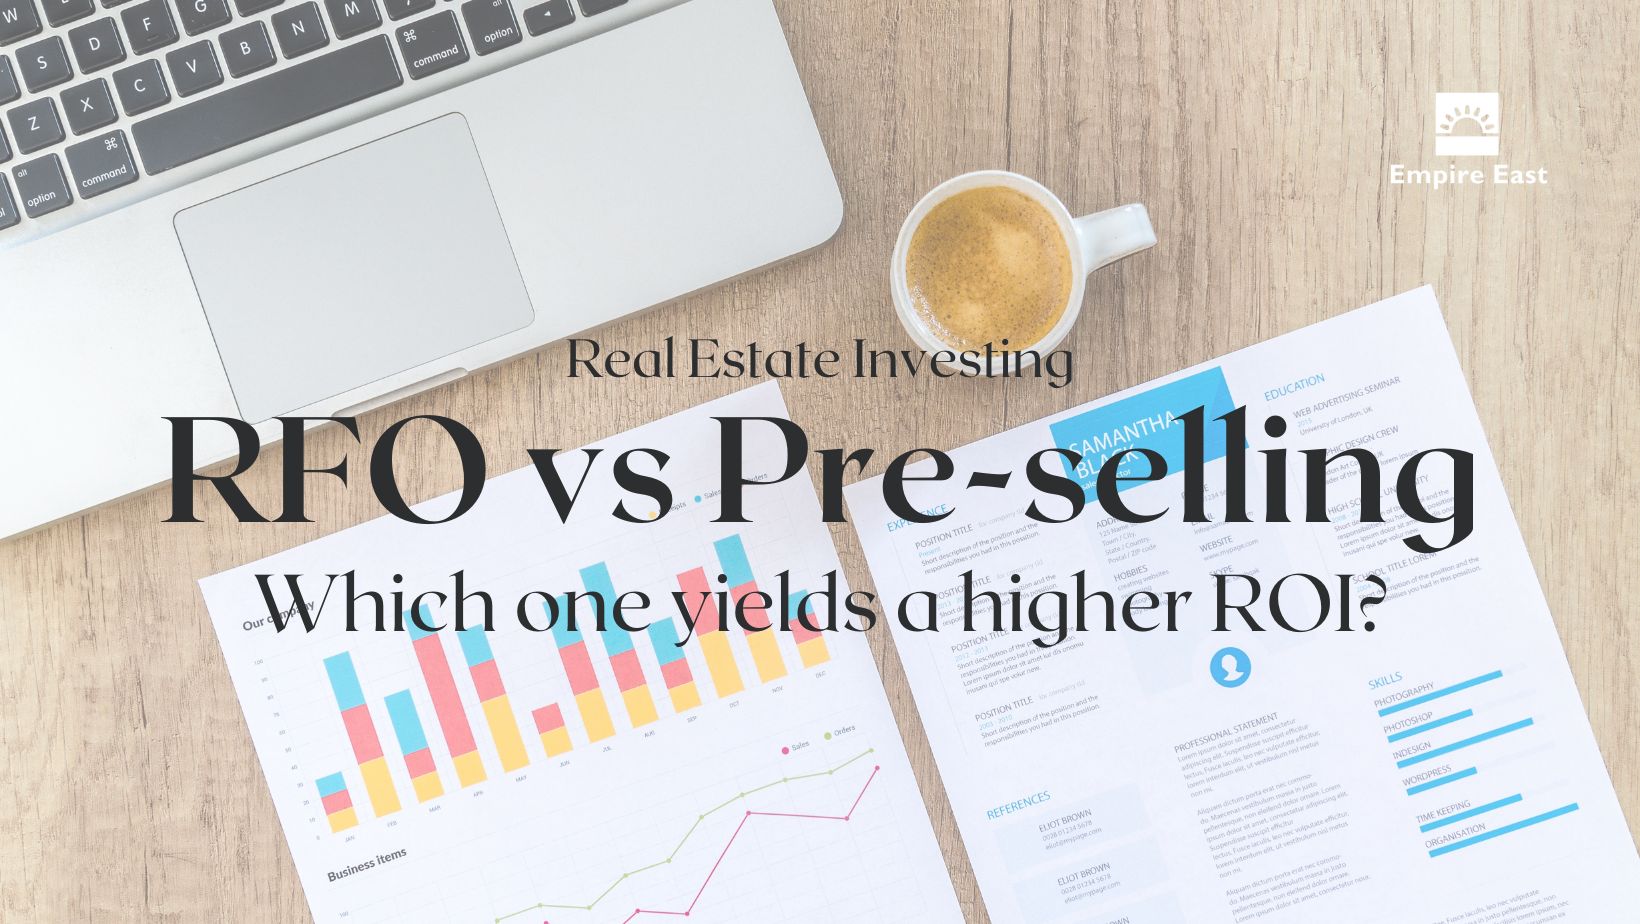 real-estate-investing-RFO-vs-pre-selling-empire-east.jpg